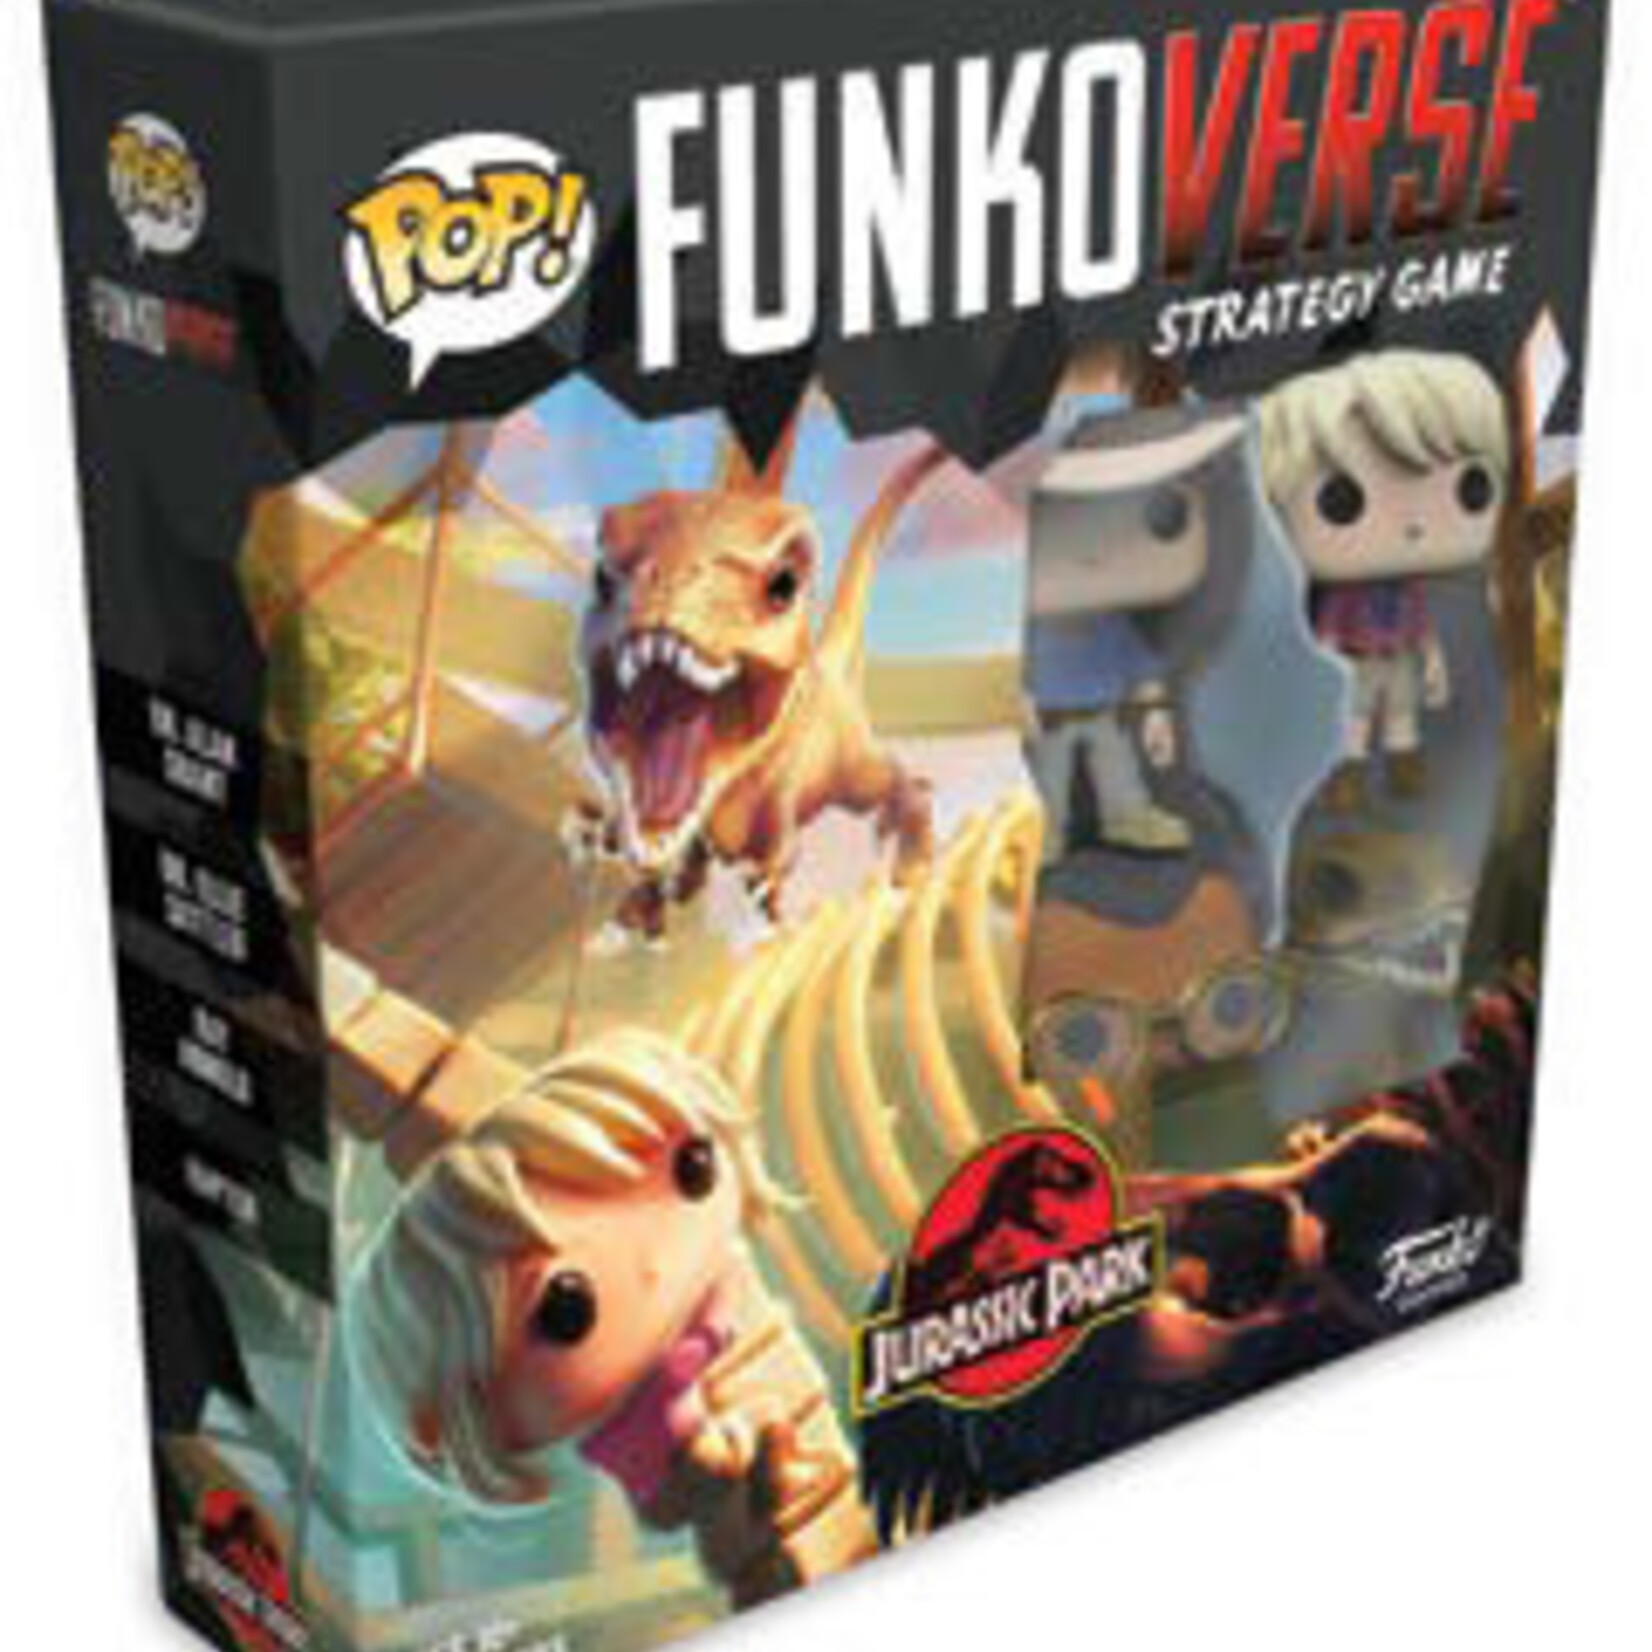 Funko Games POP! Funkoverse Strategy Game Jurassic Park 101 Expandalone